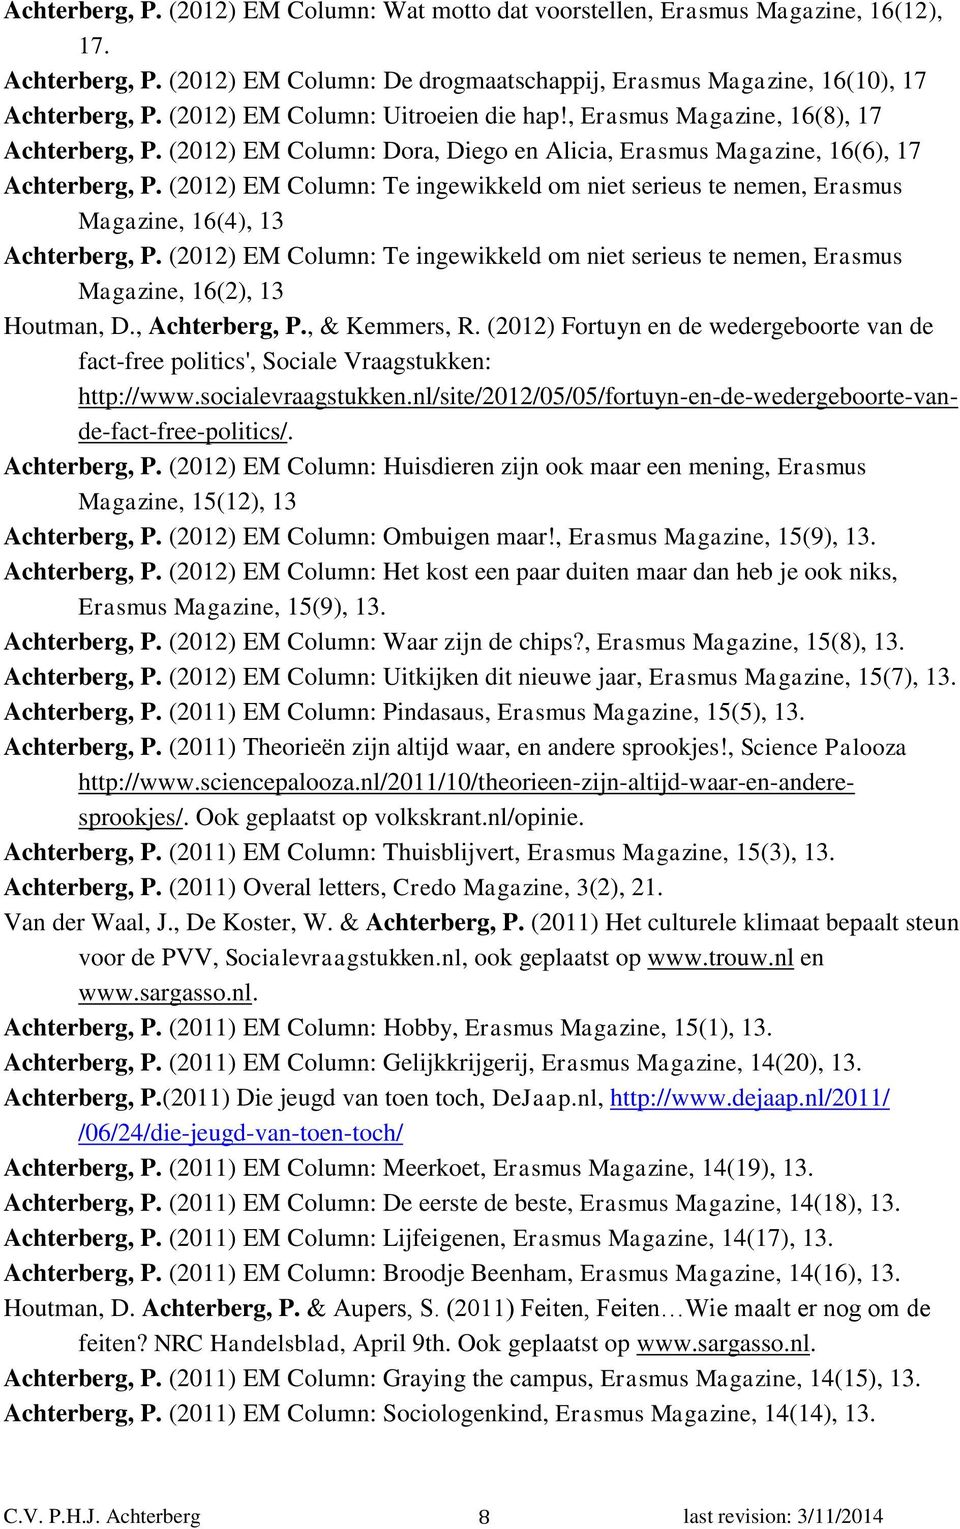 (2012) EM Column: Te ingewikkeld om niet serieus te nemen, Erasmus Magazine, 16(4), 13 Achterberg, P. (2012) EM Column: Te ingewikkeld om niet serieus te nemen, Erasmus Magazine, 16(2), 13 Houtman, D.